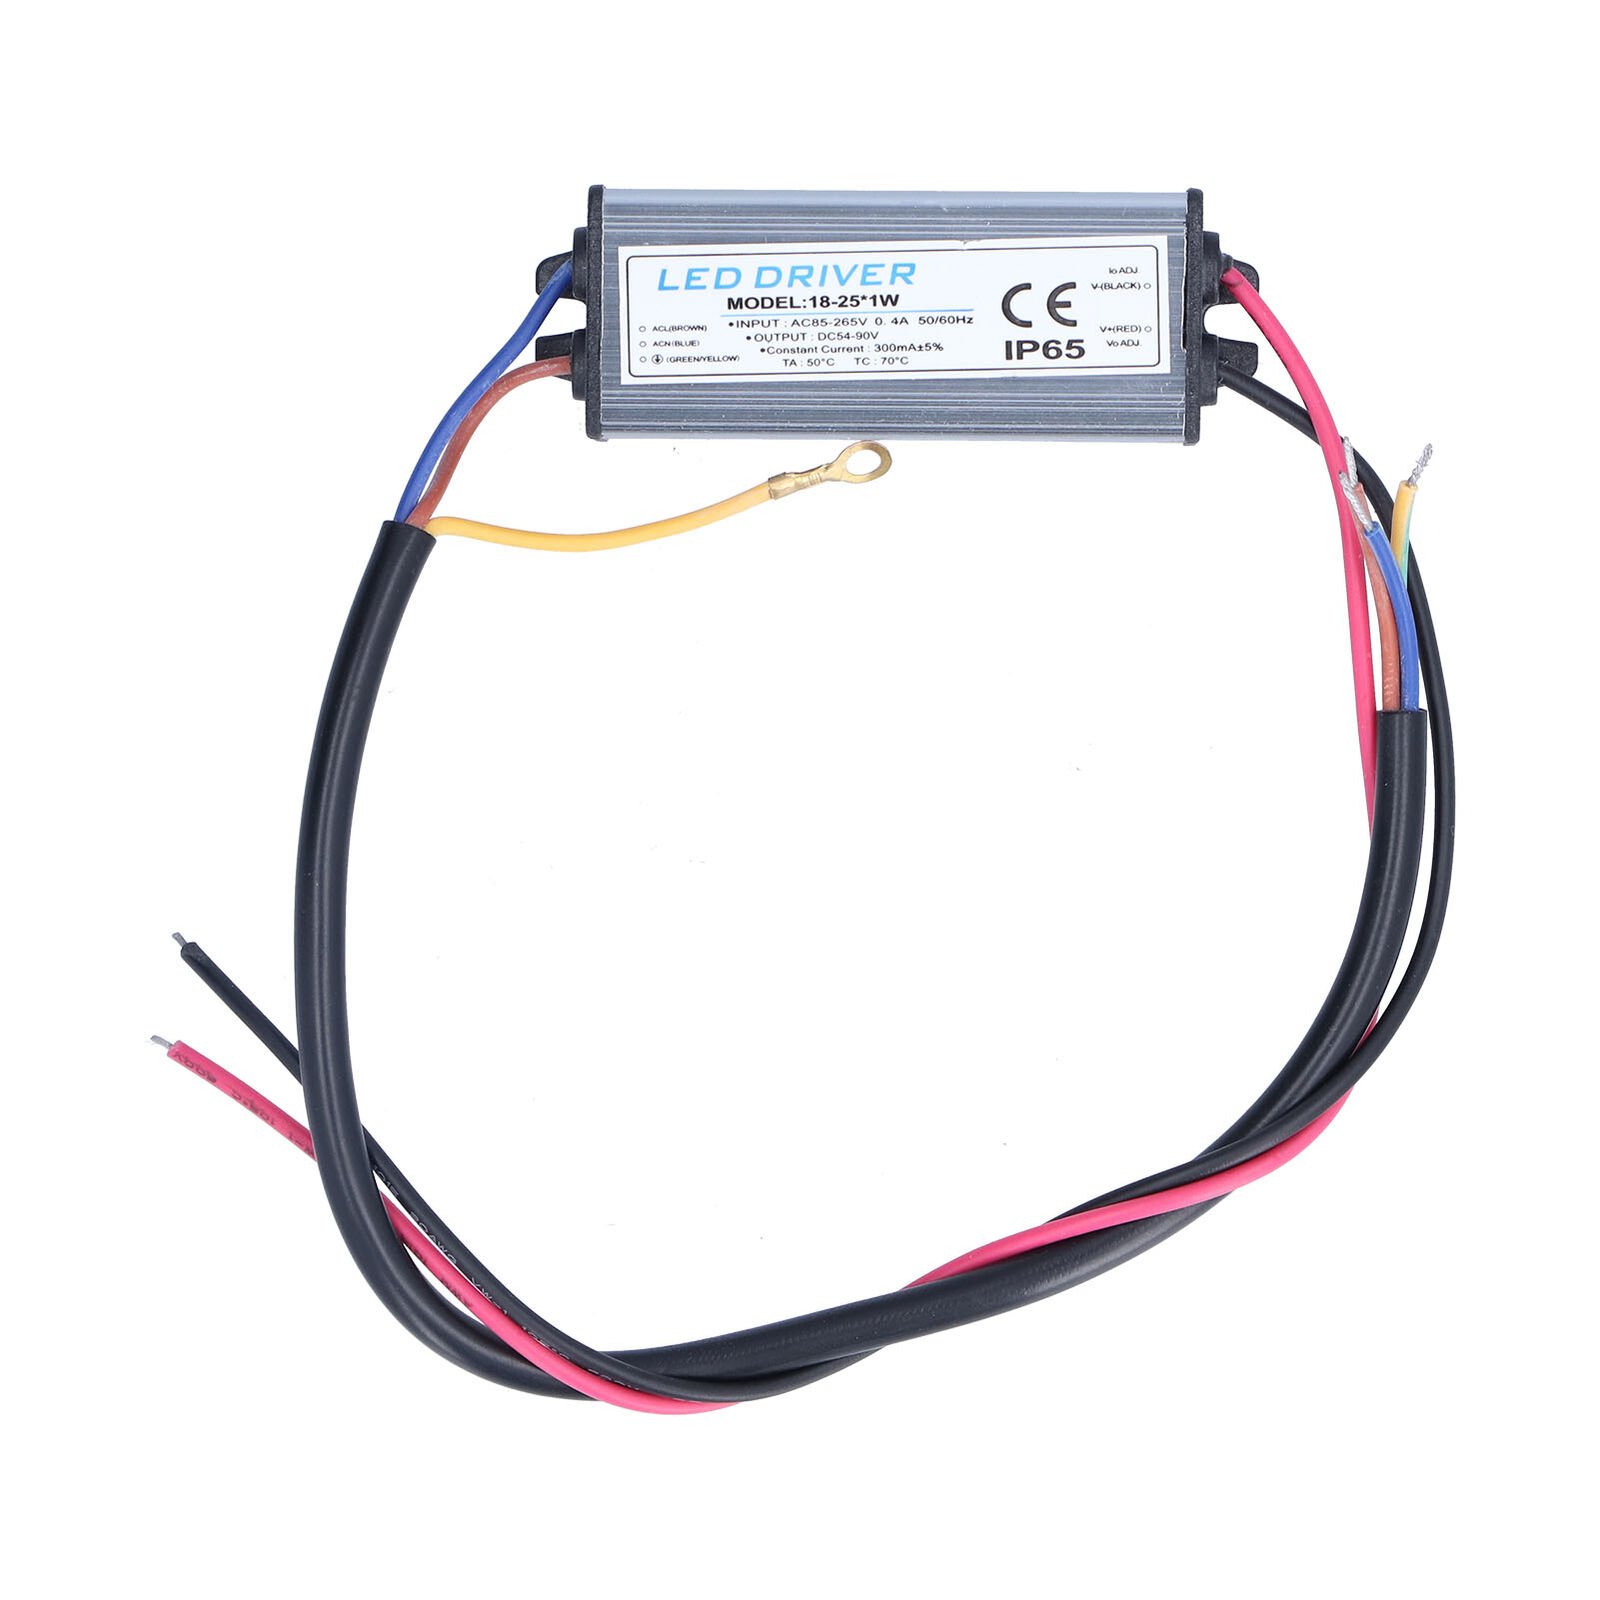 Controlador LED impermeable, fuente de alimentación de voltaje constante MODELO 18-25*1W